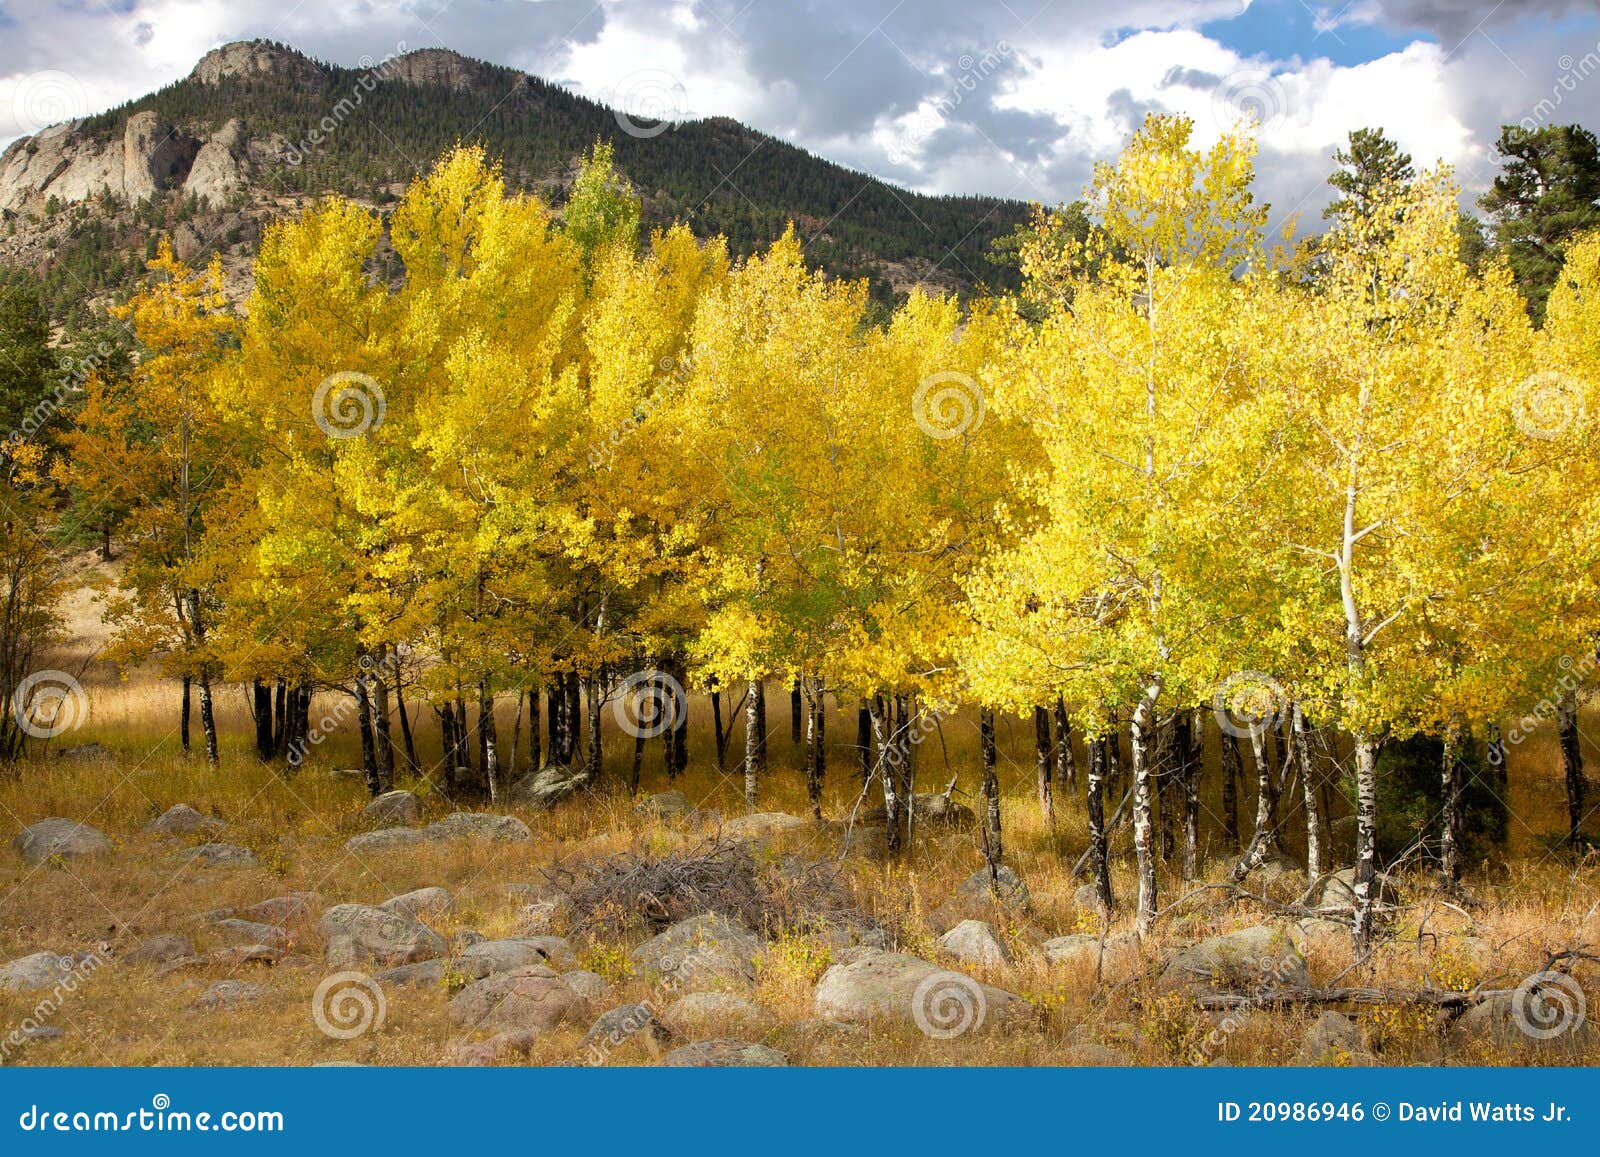 yellow aspen trees